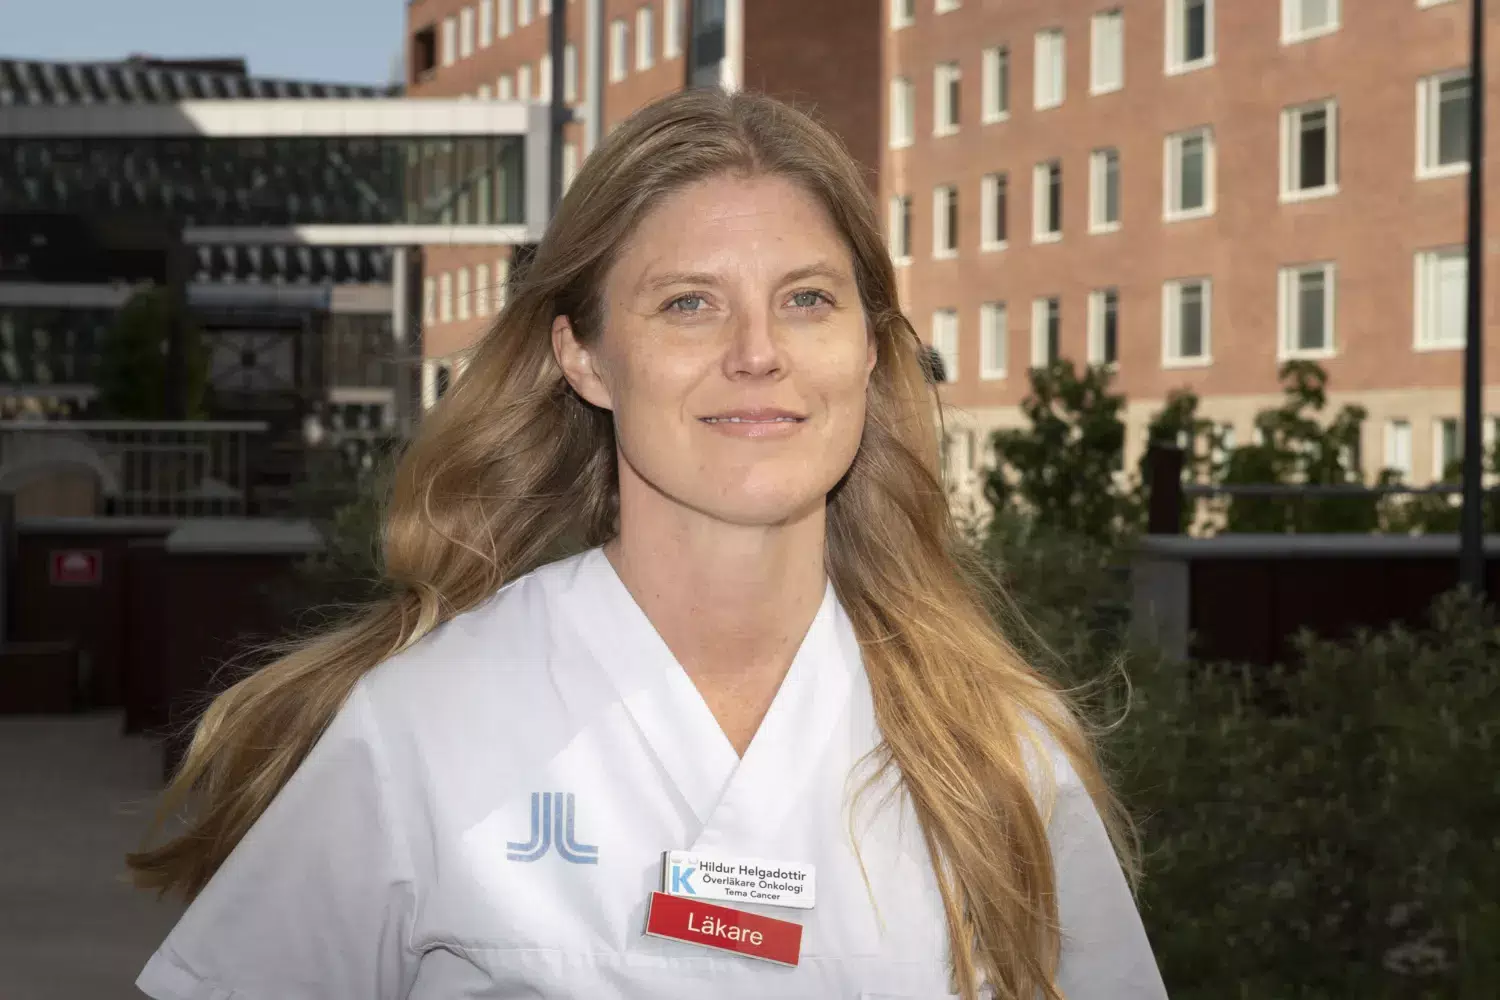 A portrait of dr Hildur Helgadottir, she has lång, blond hair and is dressed in white scrubs.